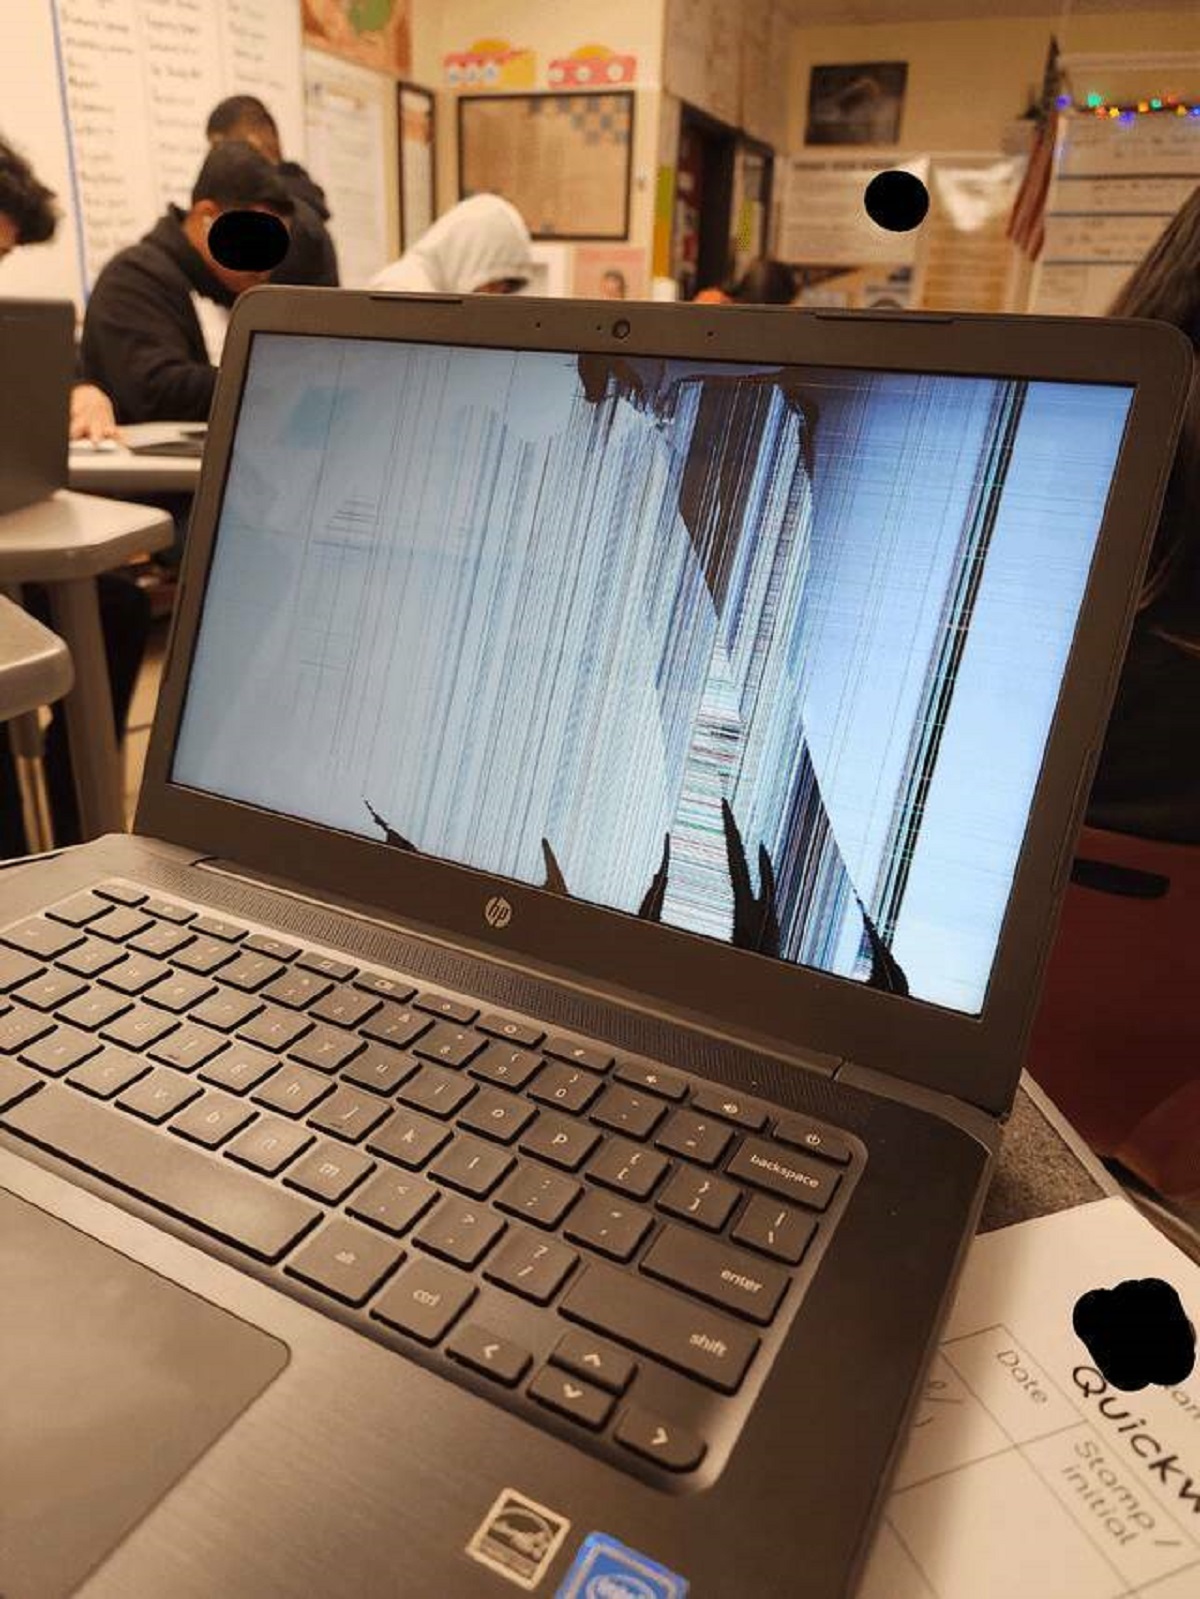 "Boyfriend's computer broke right before finals week"